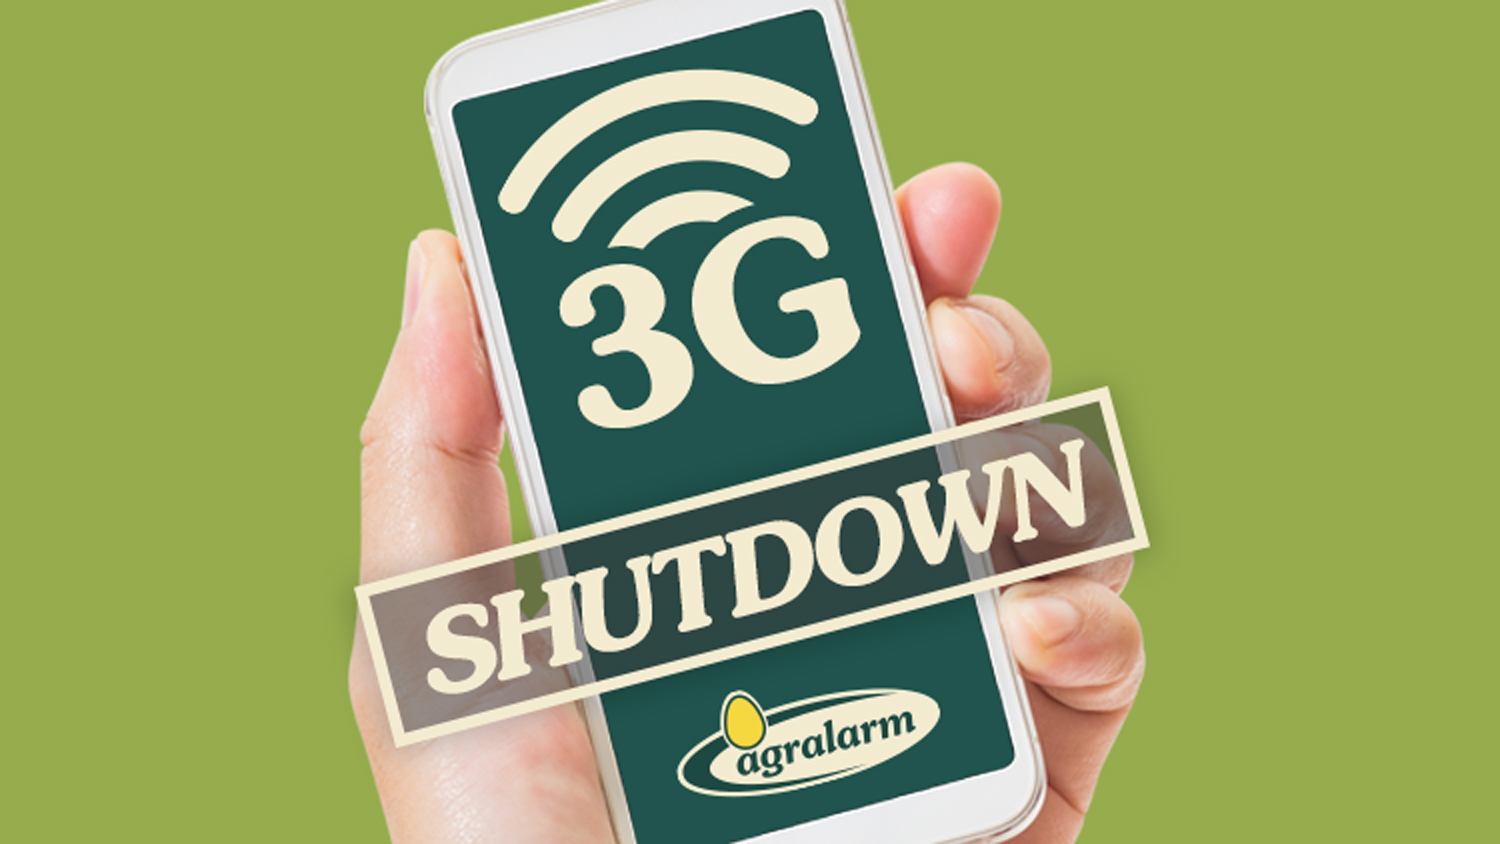 3G Closure, Mobiles